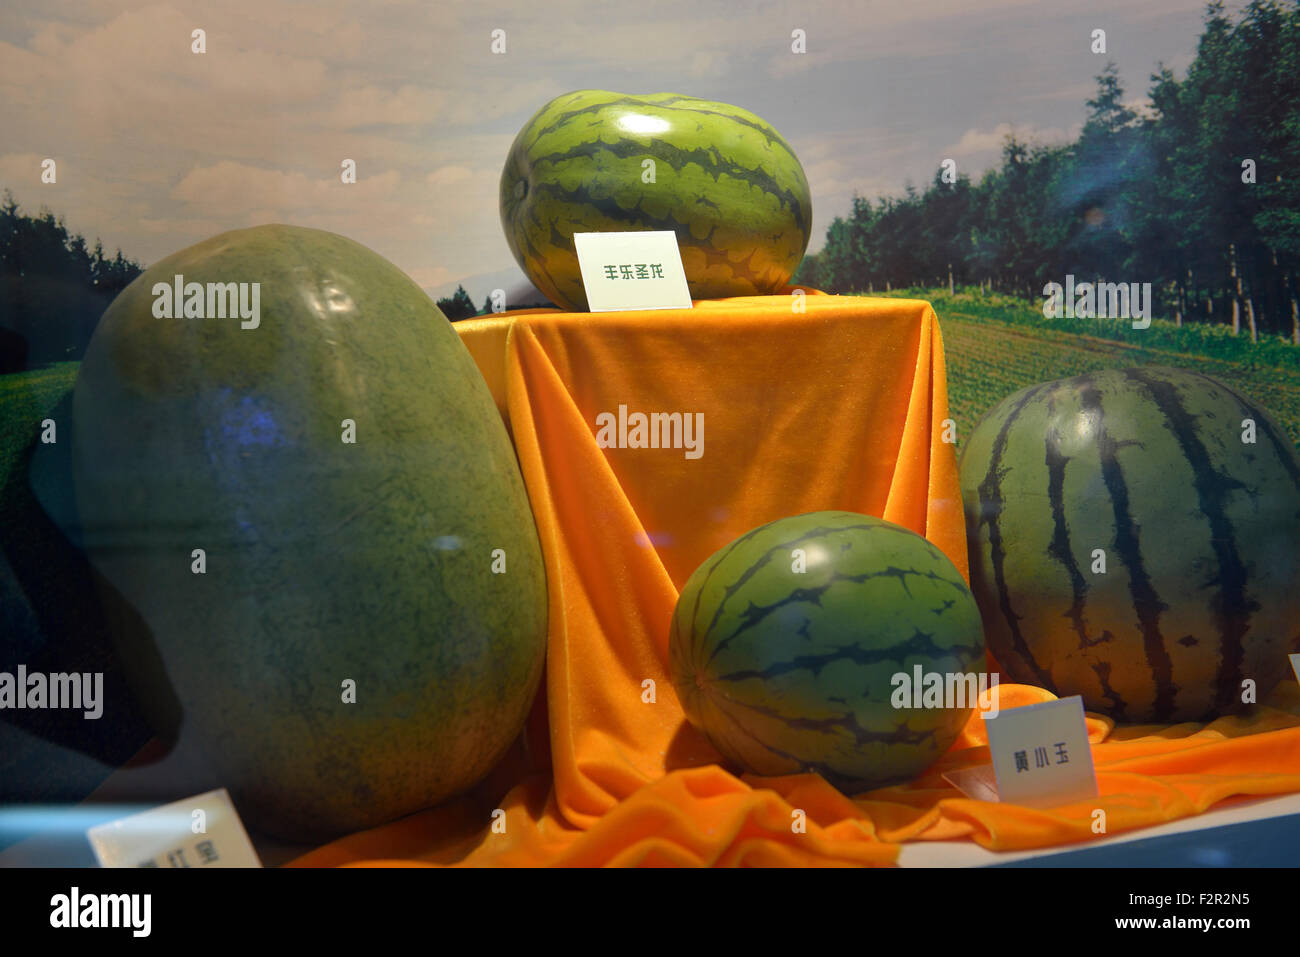 Wassermelone-Museum in Panggezhuang, Daxing District, Beijing, China. 22 Sep 2015 Stockfoto